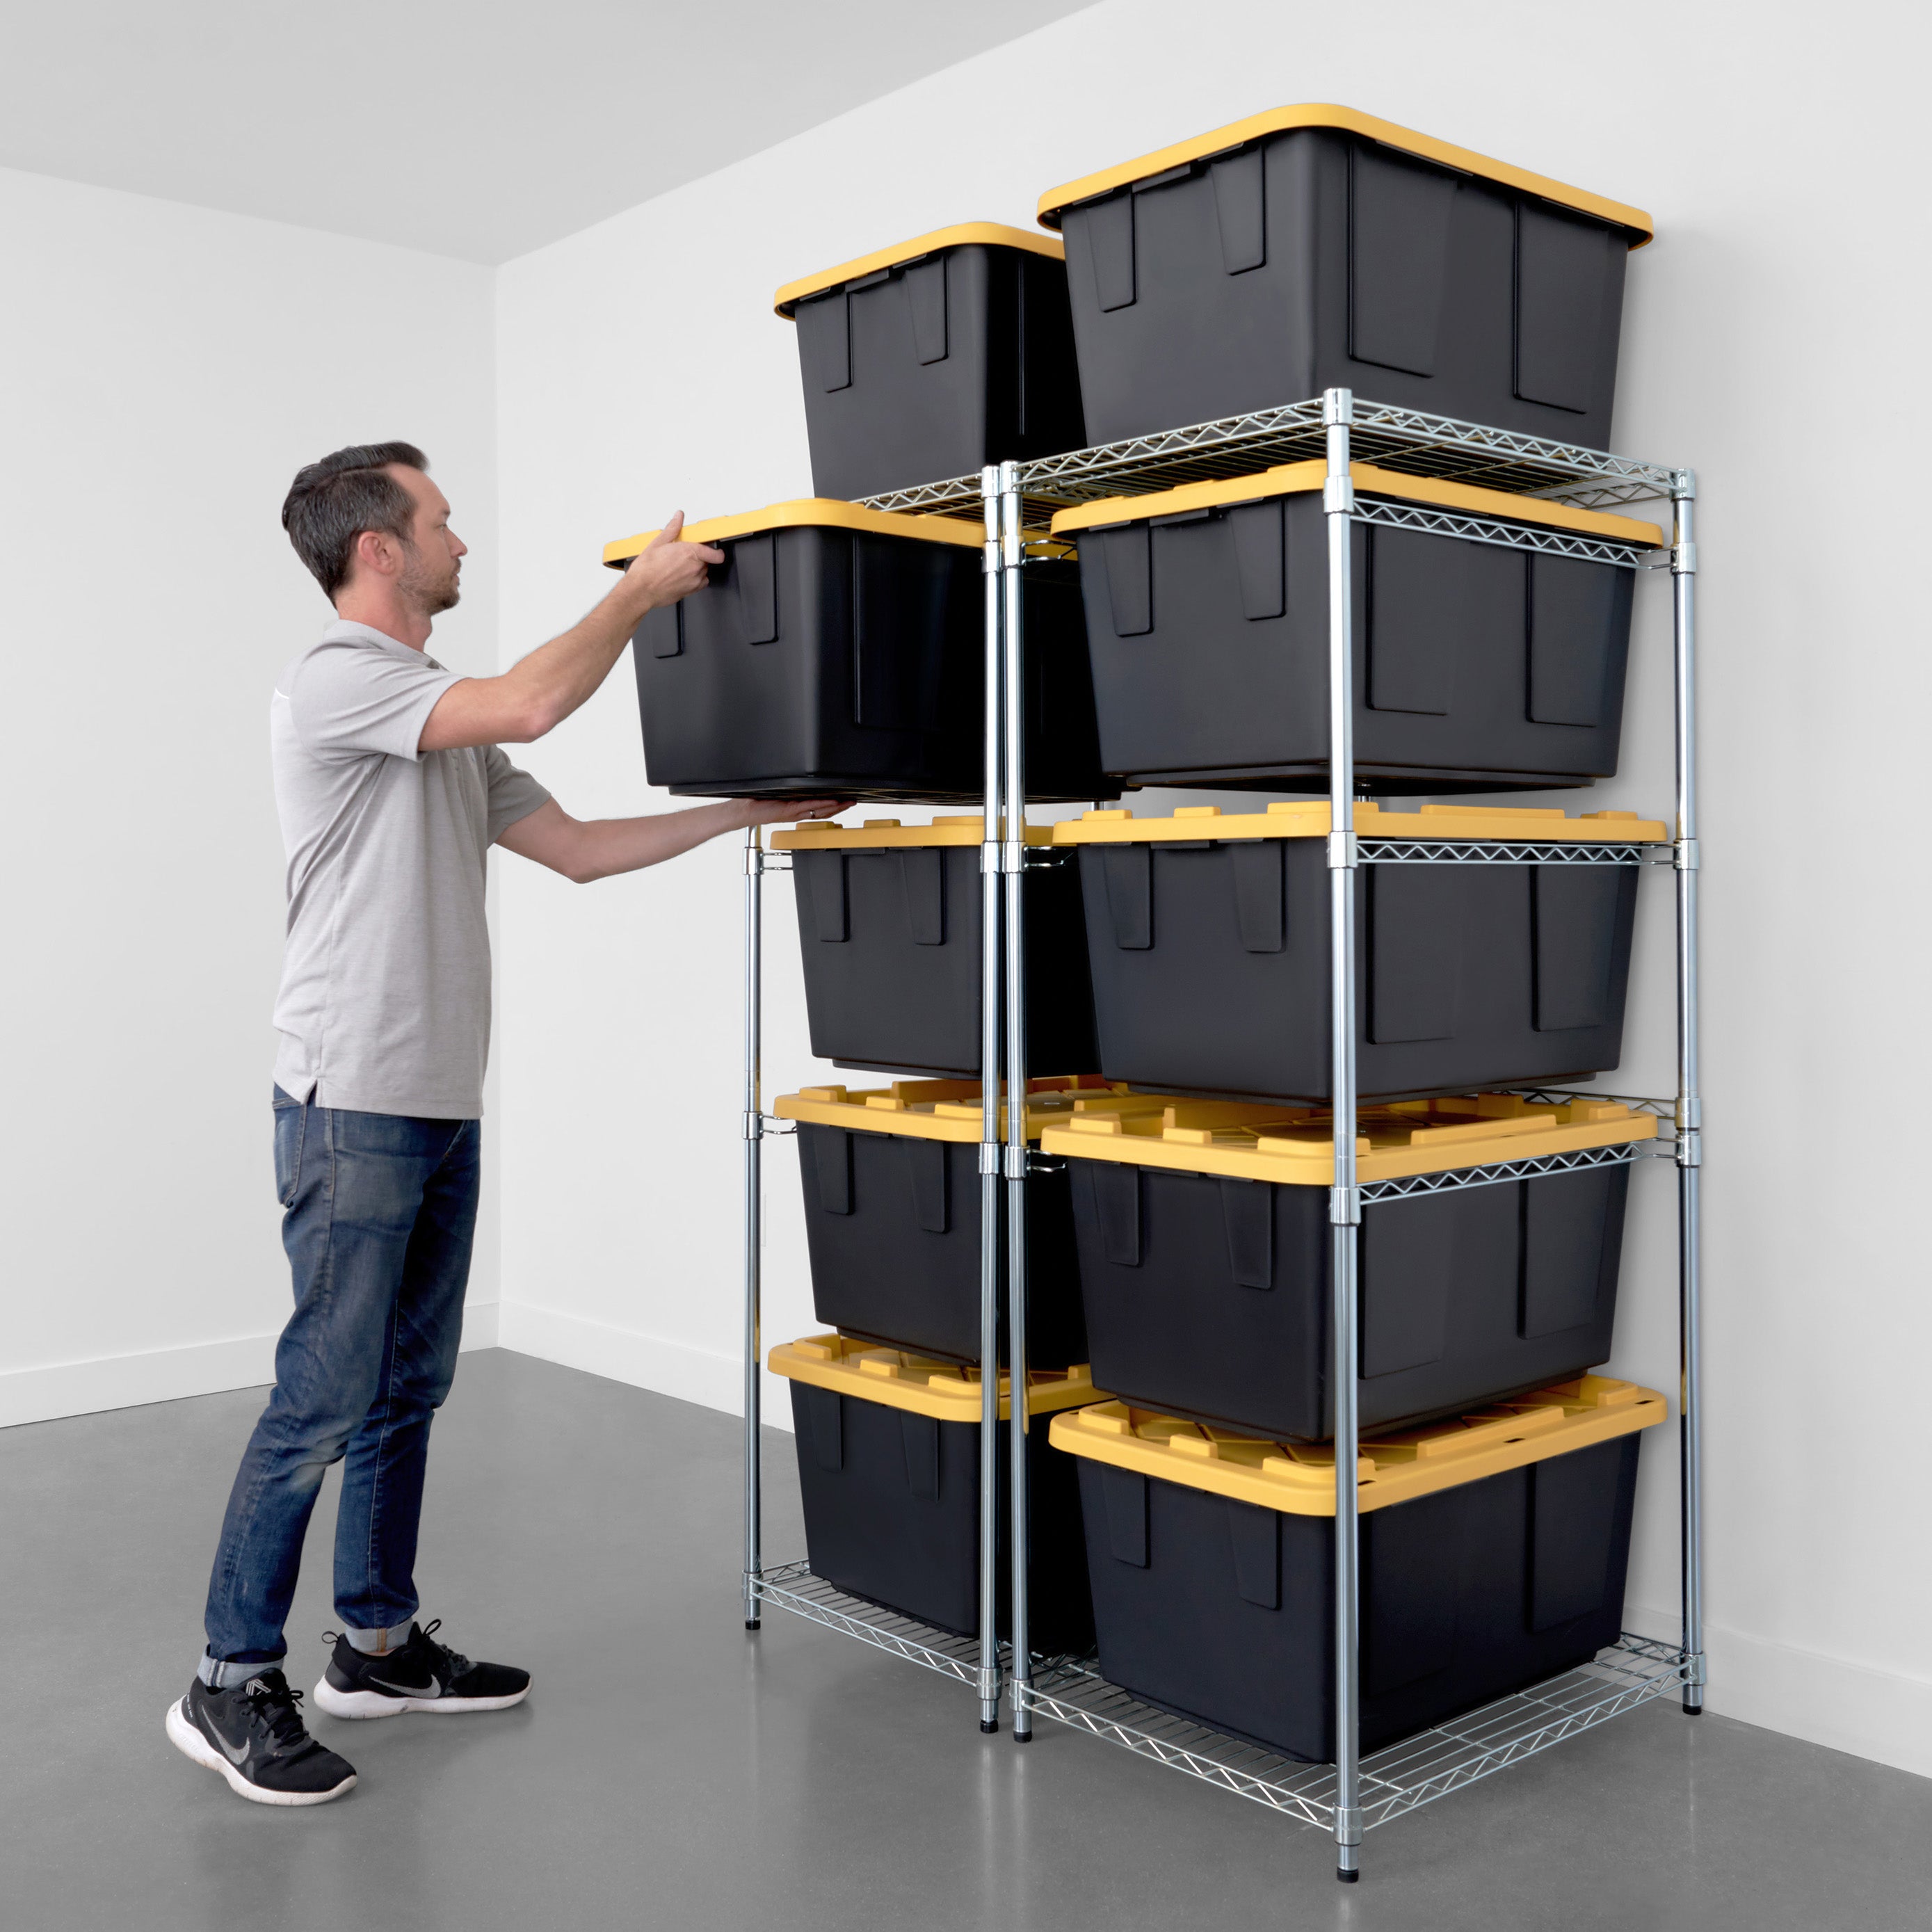 SafeRacks Bin Rack - Holds up to 5 Storage Bins